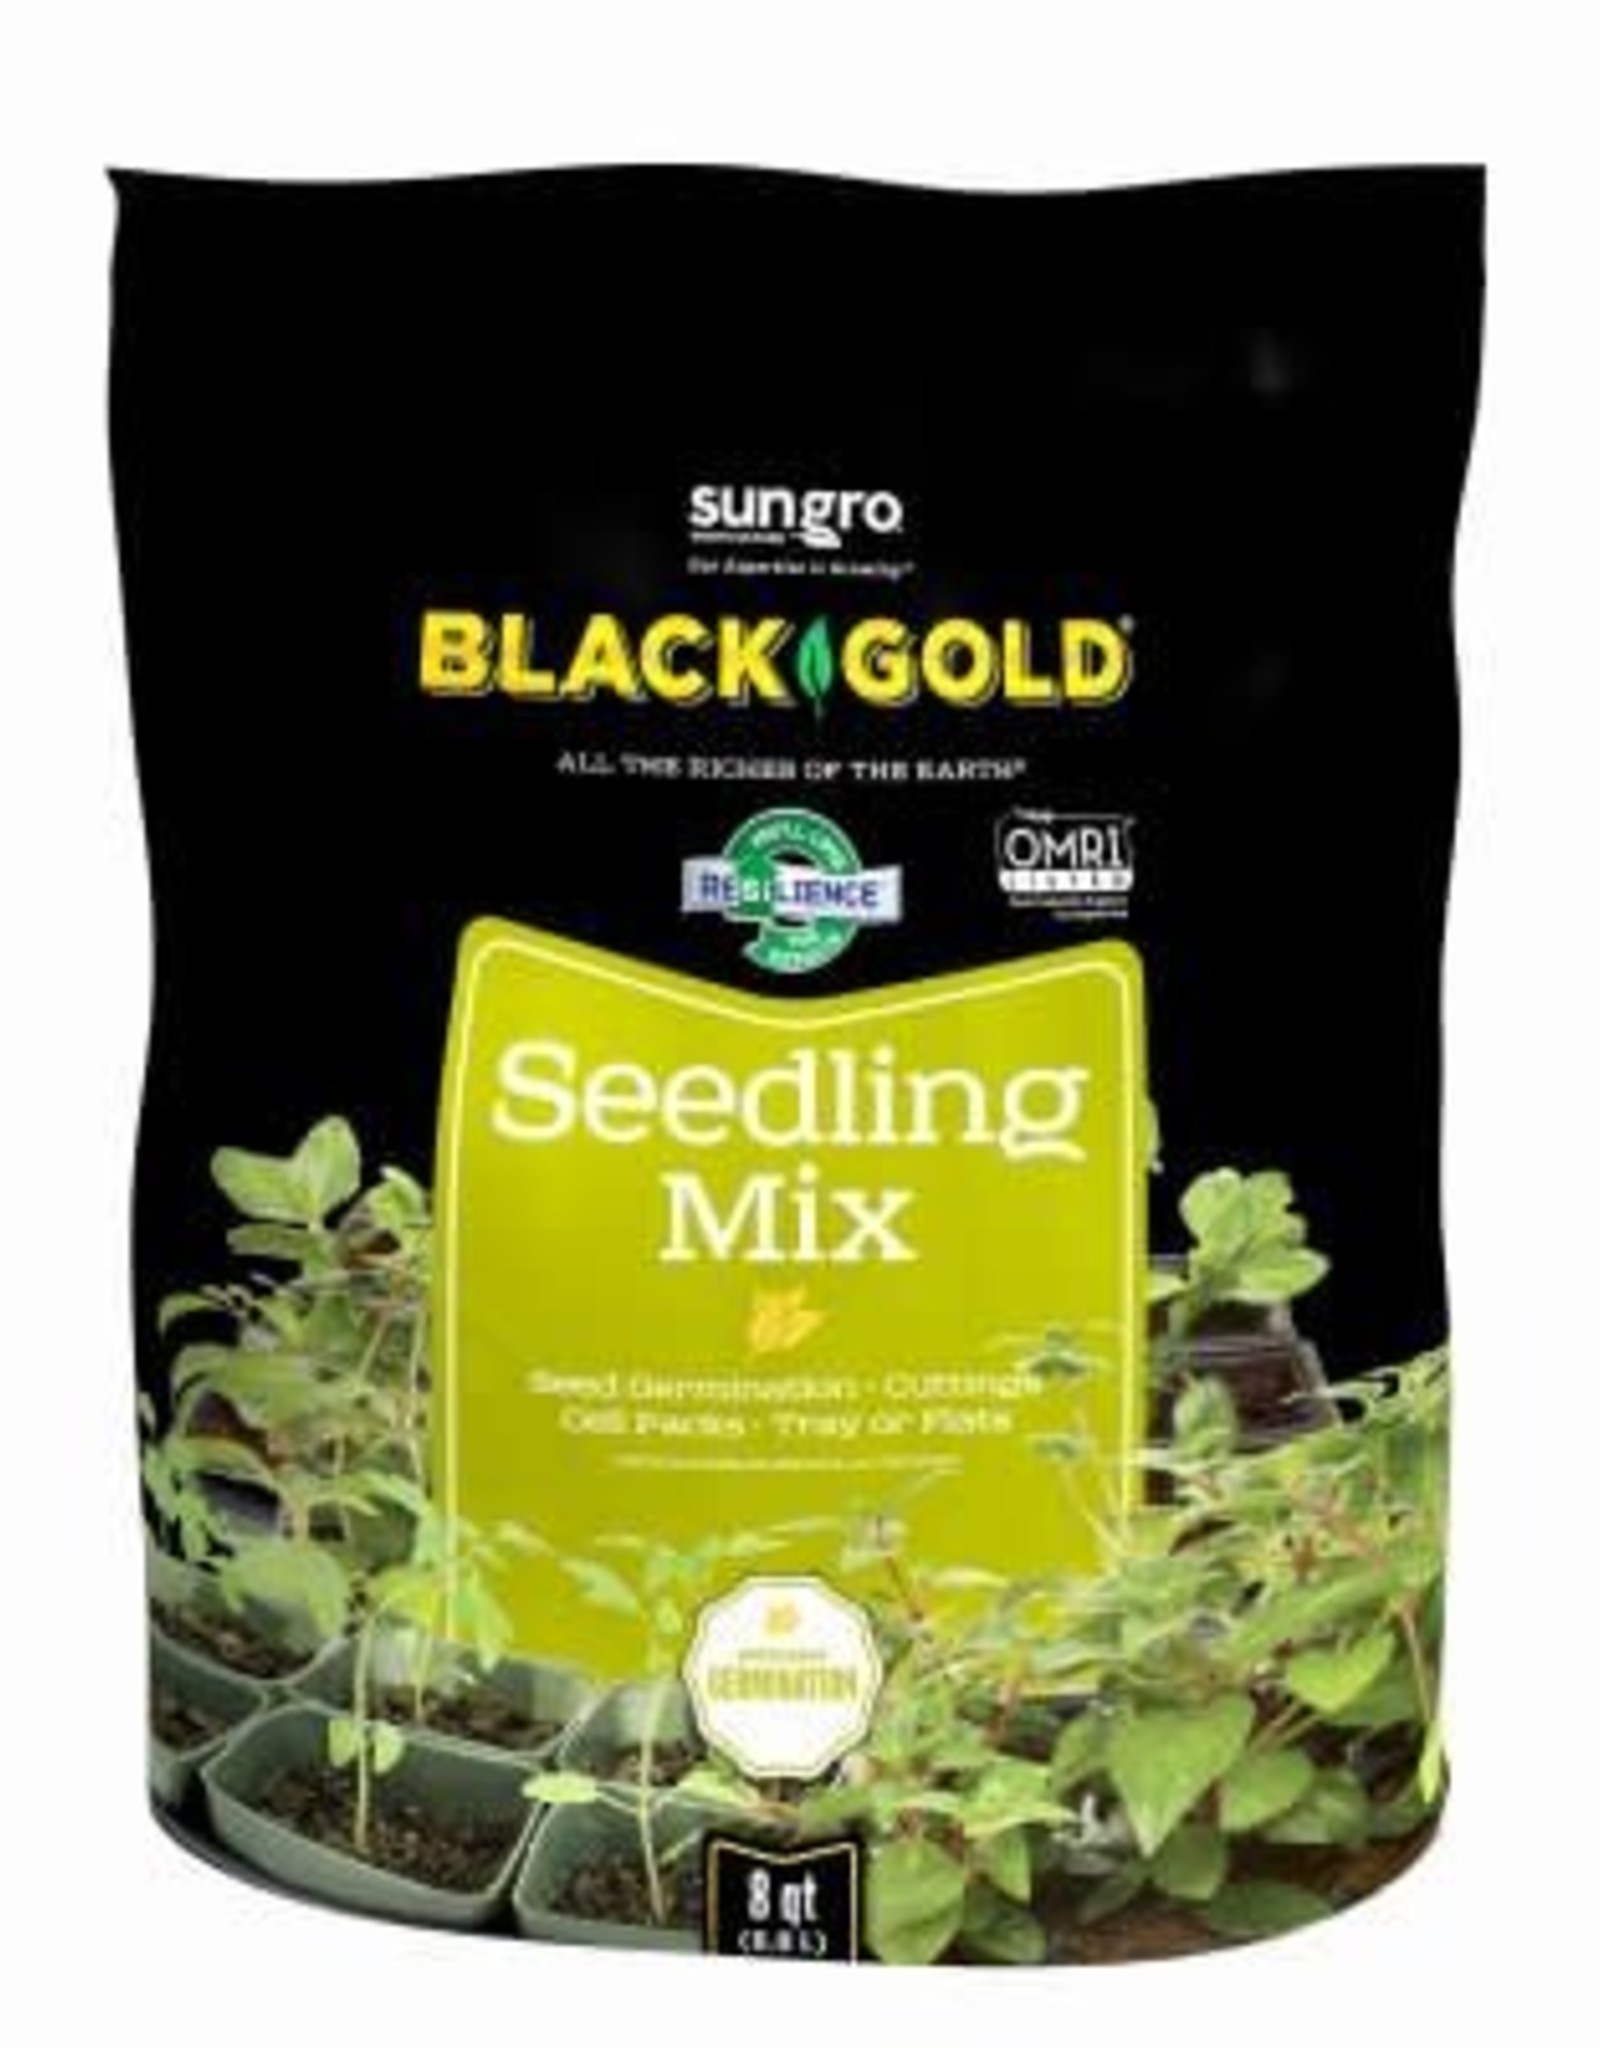 Black Gold Black Gold Seedling Mix 16 qt